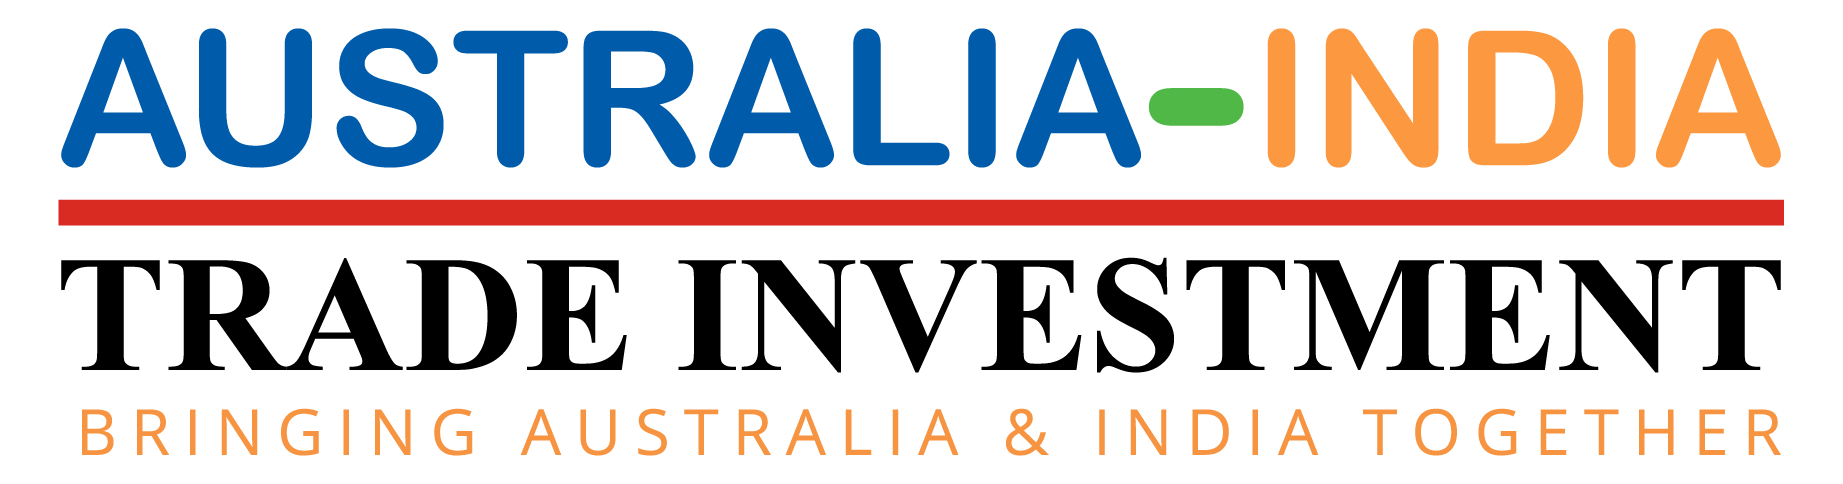 Australia-India_Logo_tag line.png